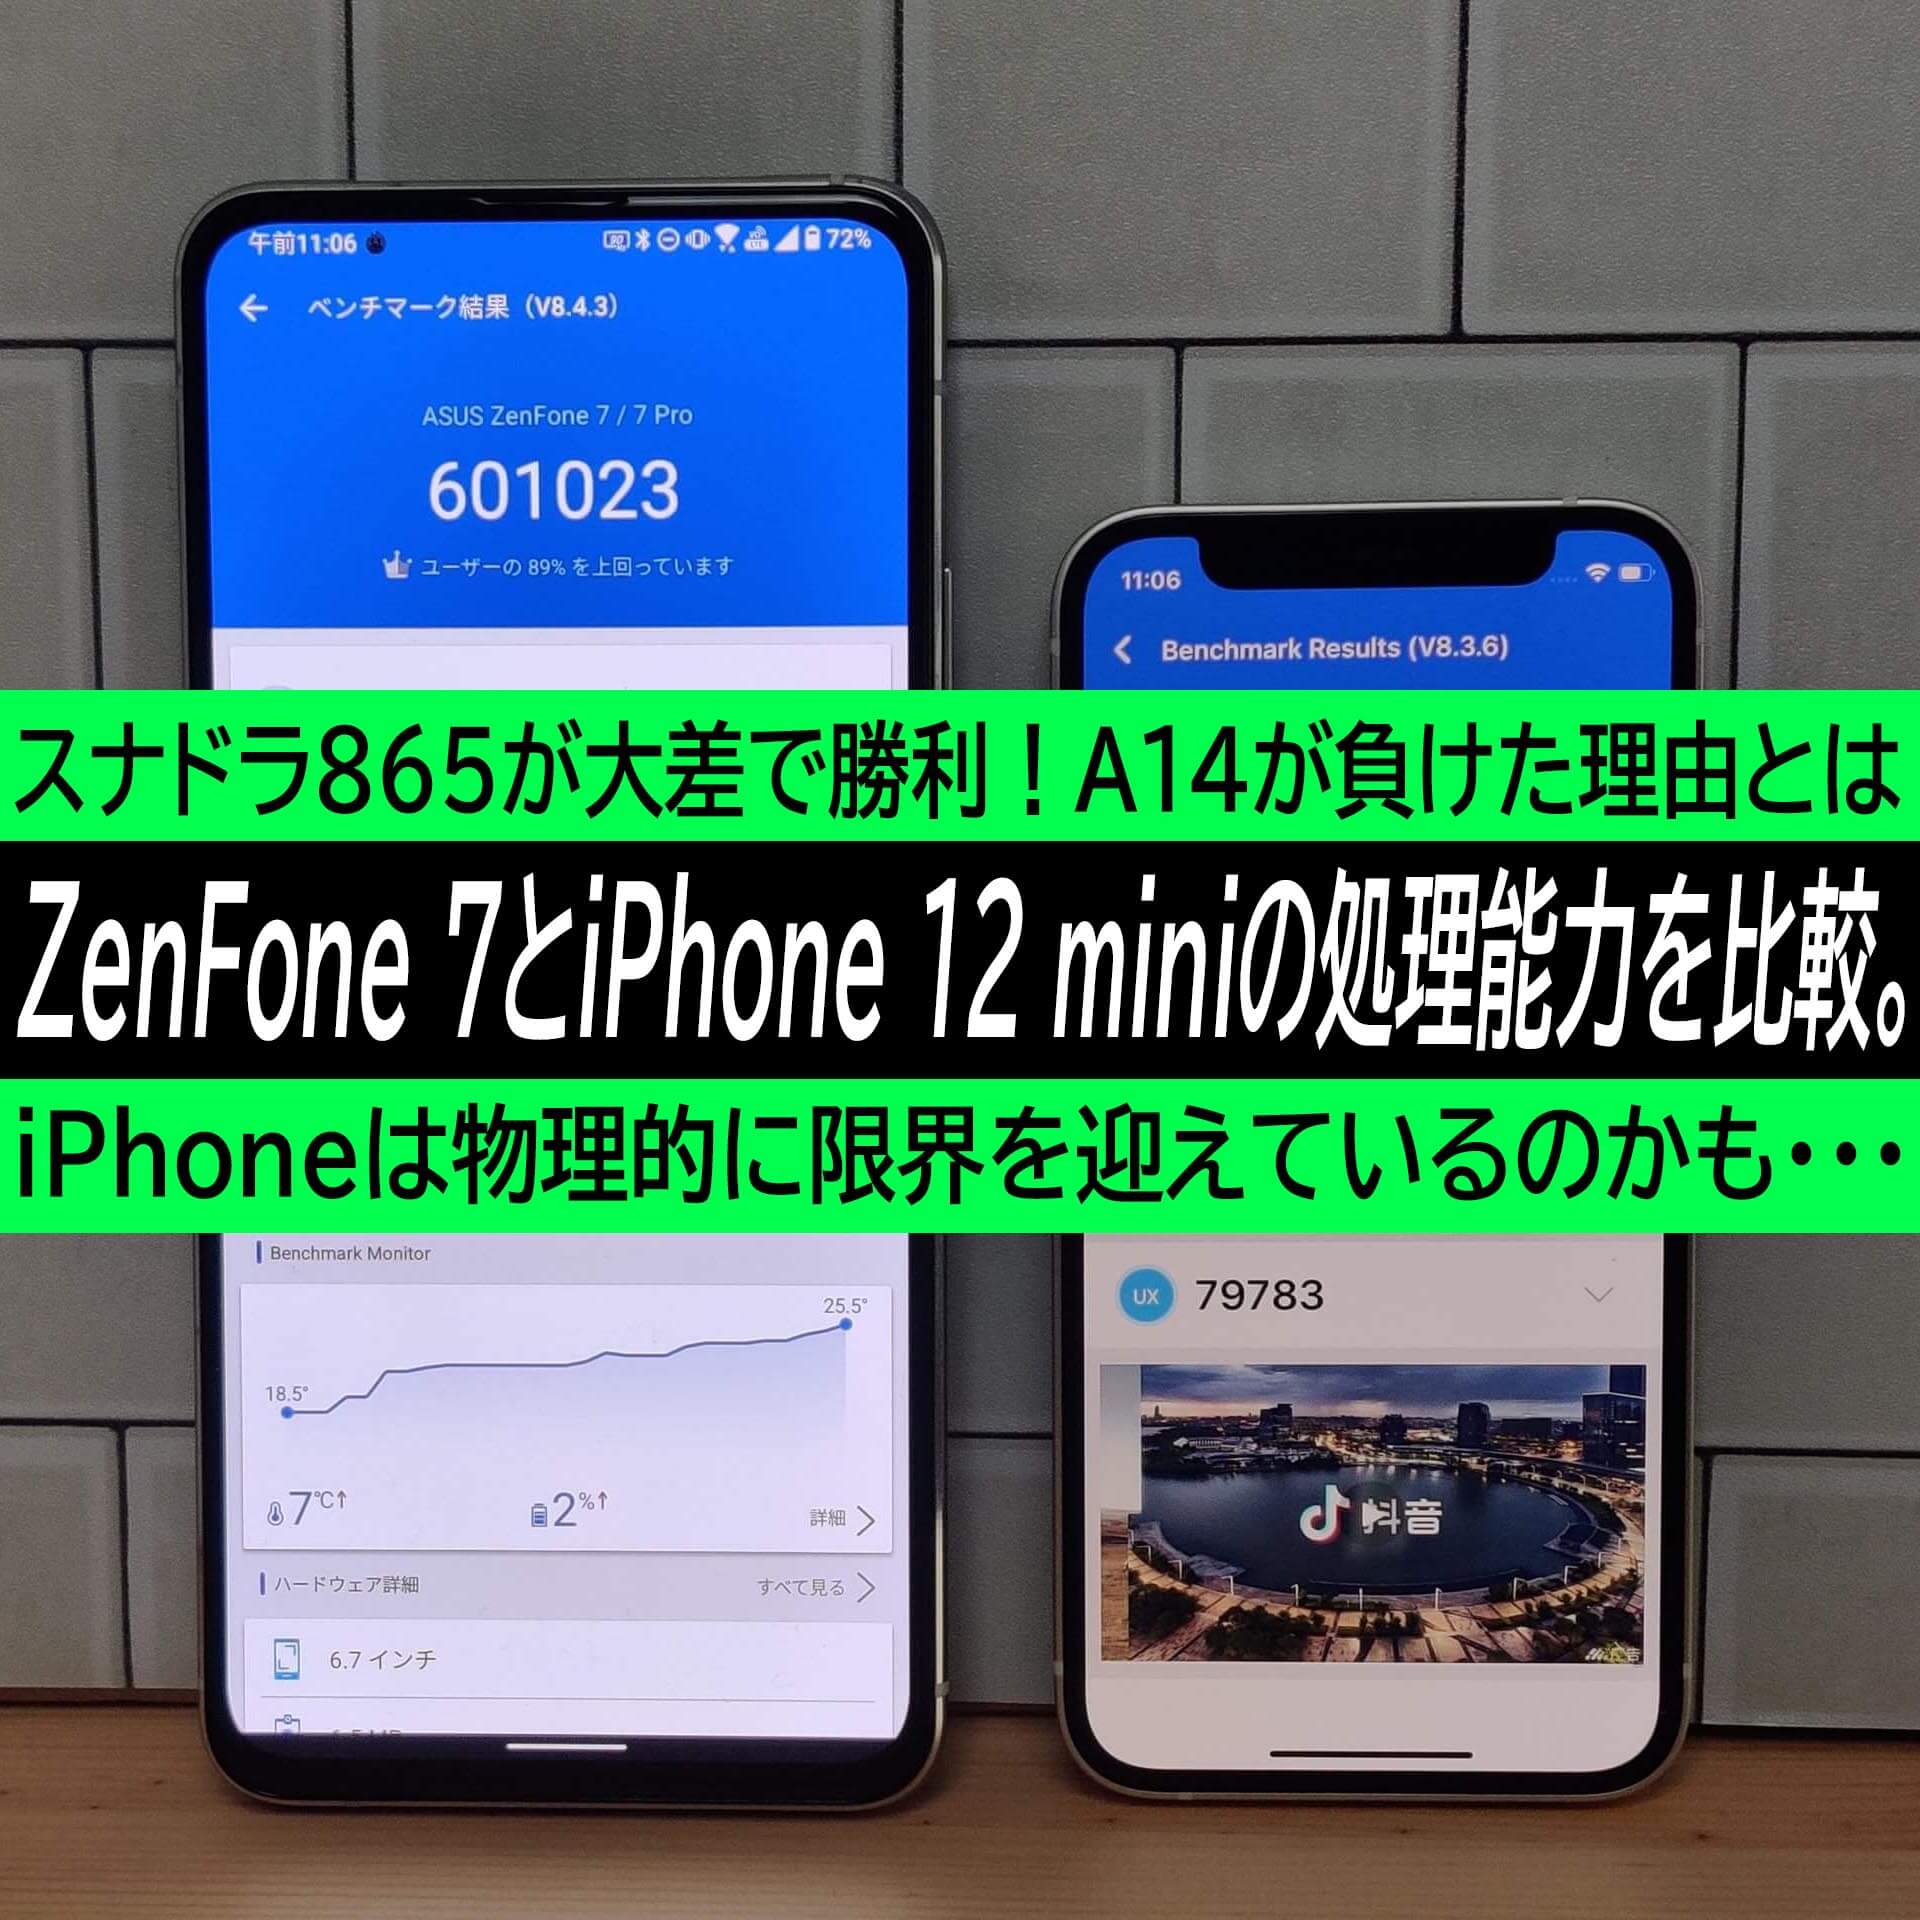 Zenfone 7とiphone 12 Miniの処理能力を比較 スナドラ865が大差で勝利 A14が負けた理由とは